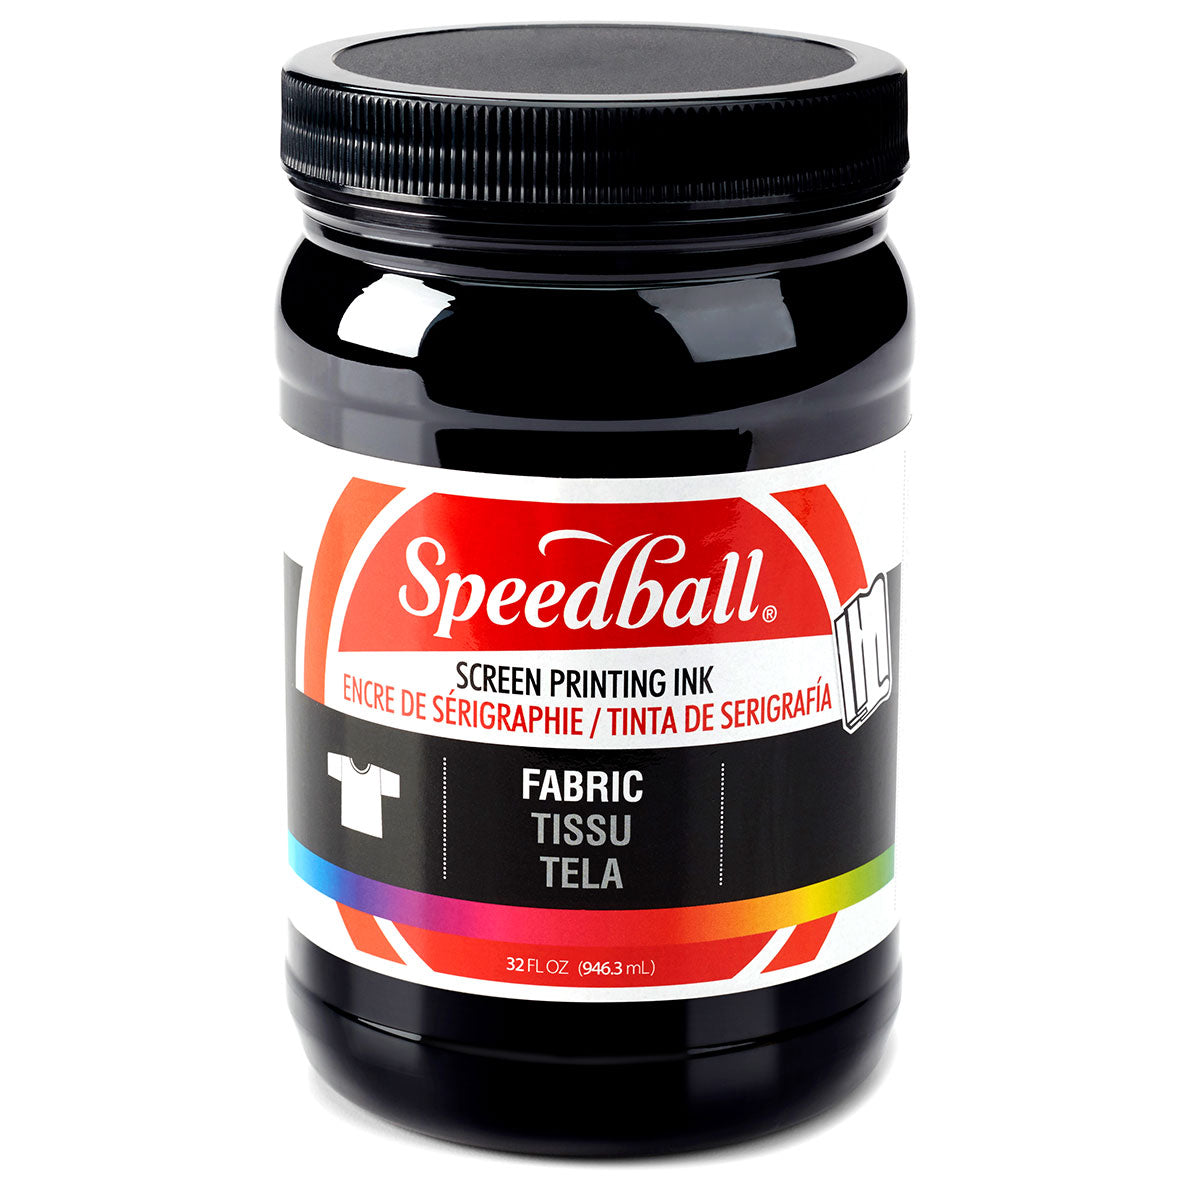 Speedball - Fabric Screen Printing Ink 946ml (32oz) - Black